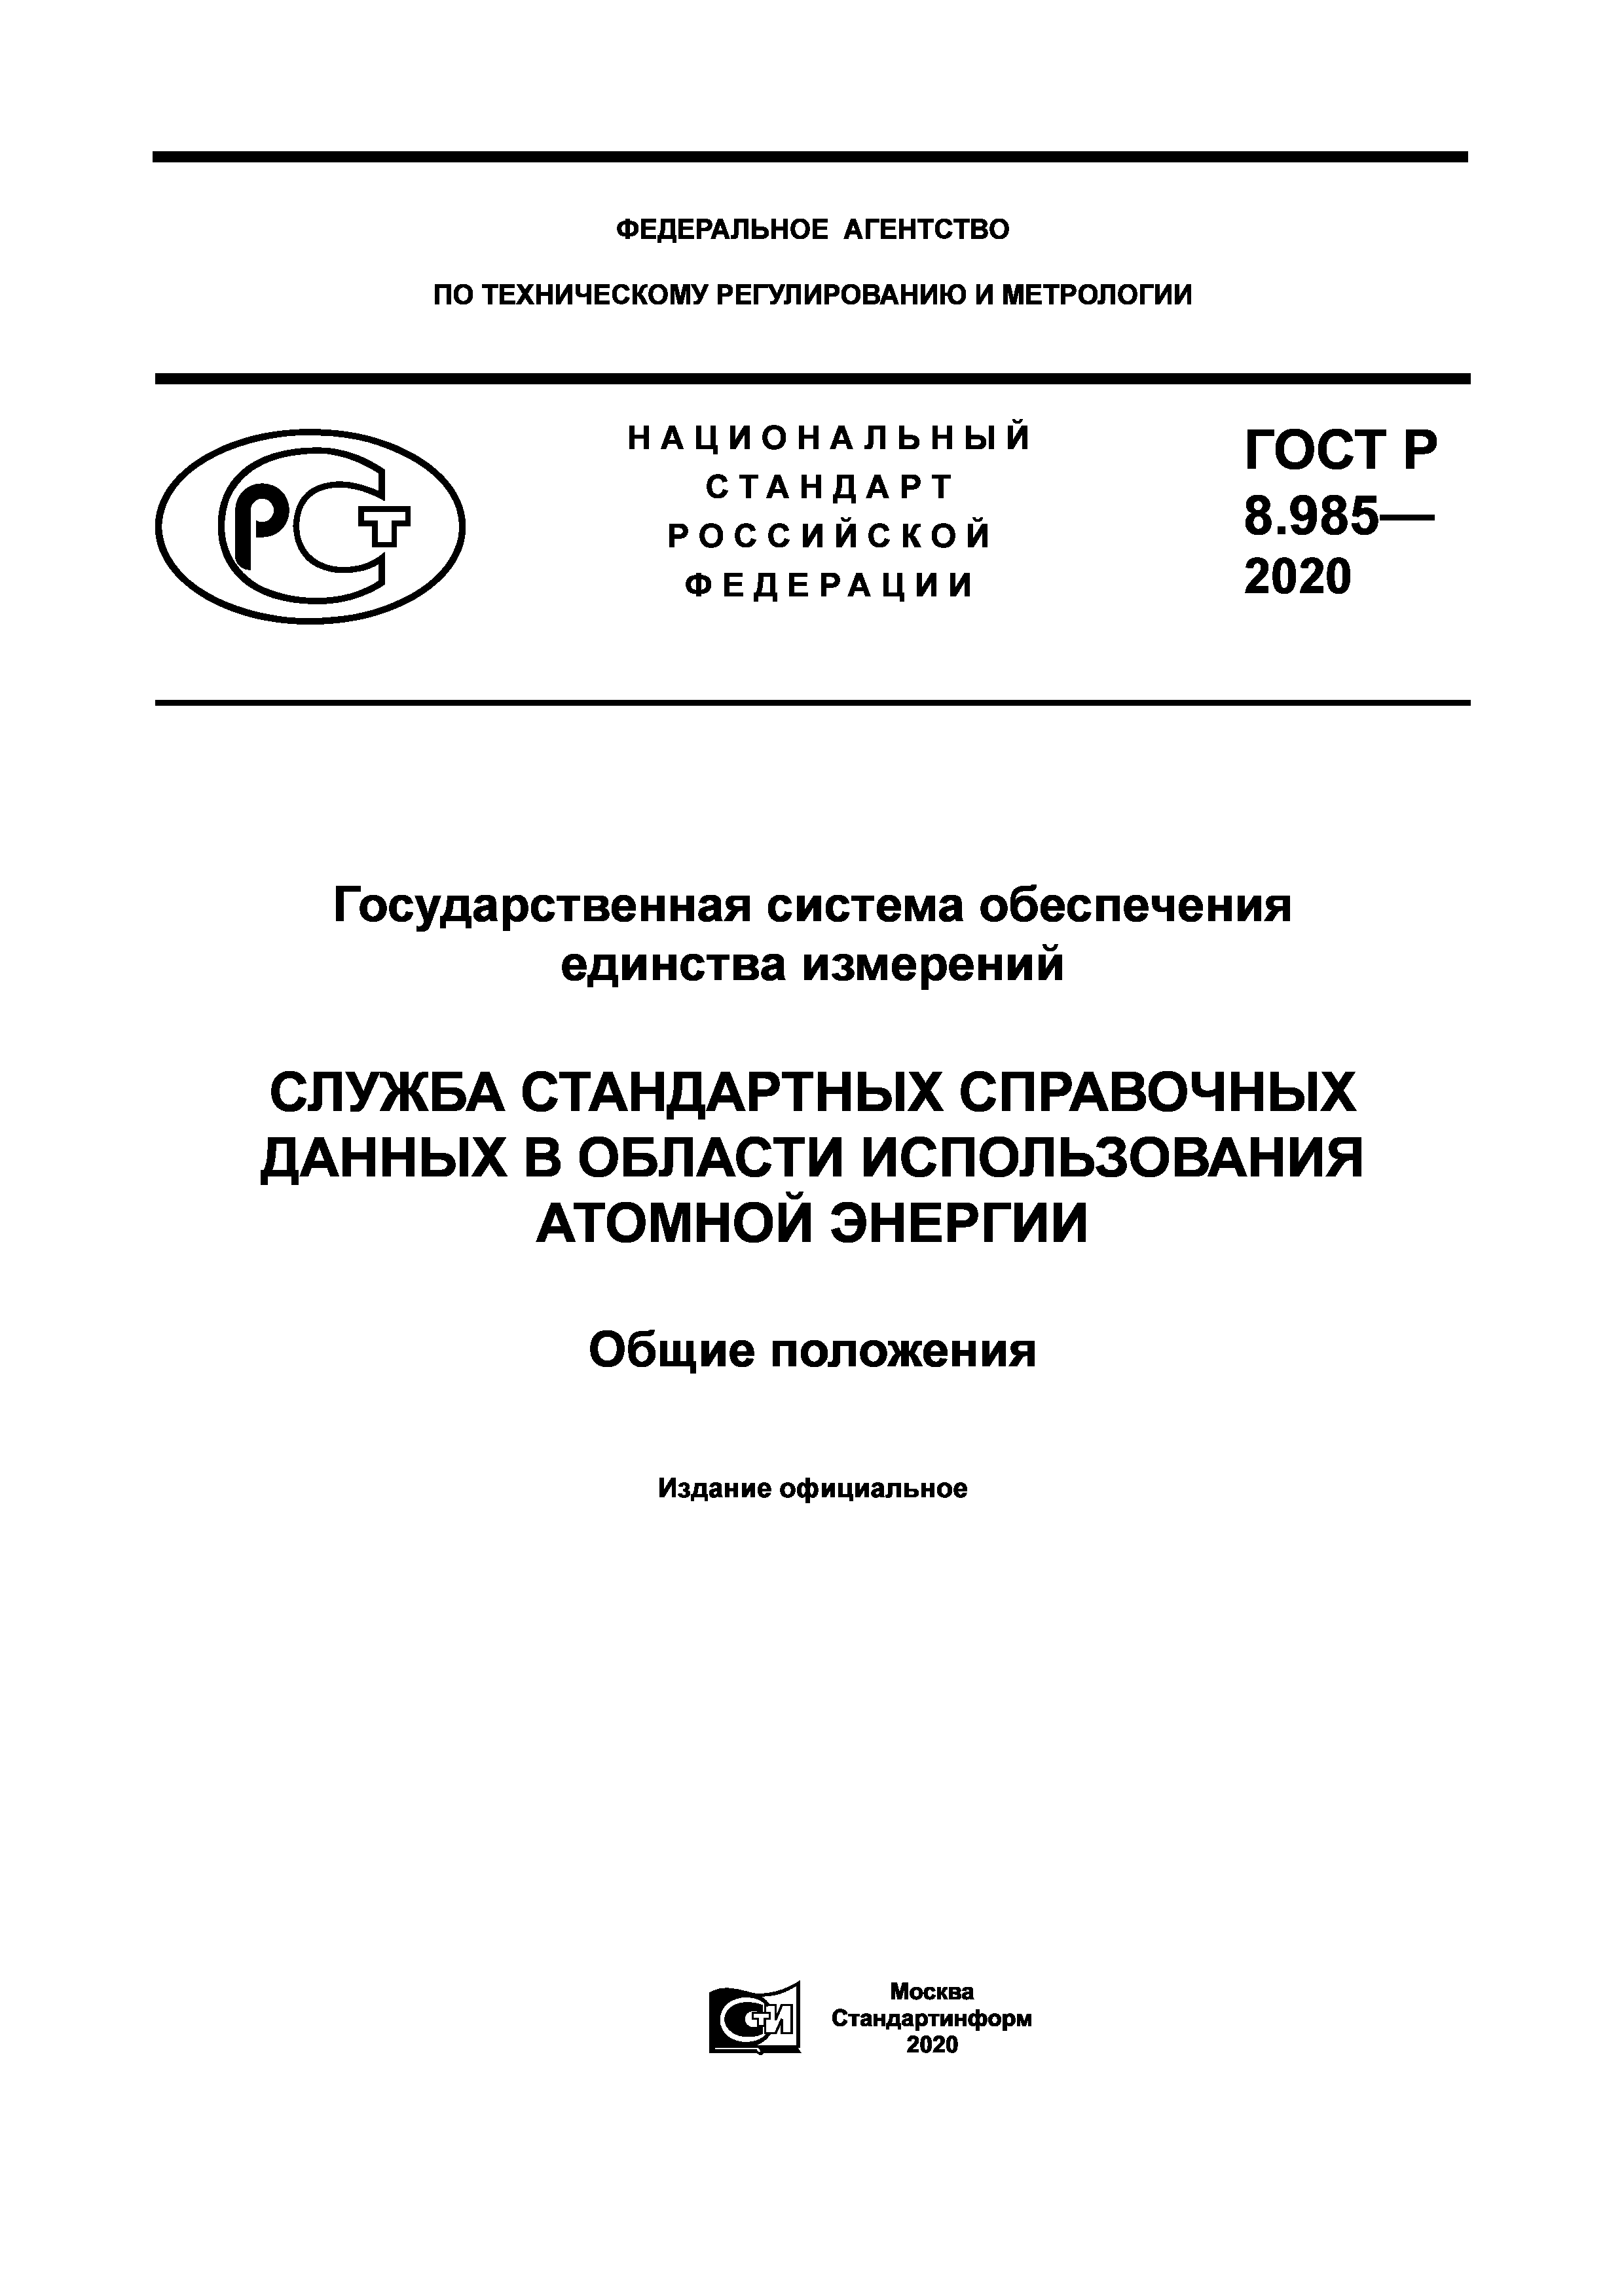 ГОСТ Р 8.985-2020